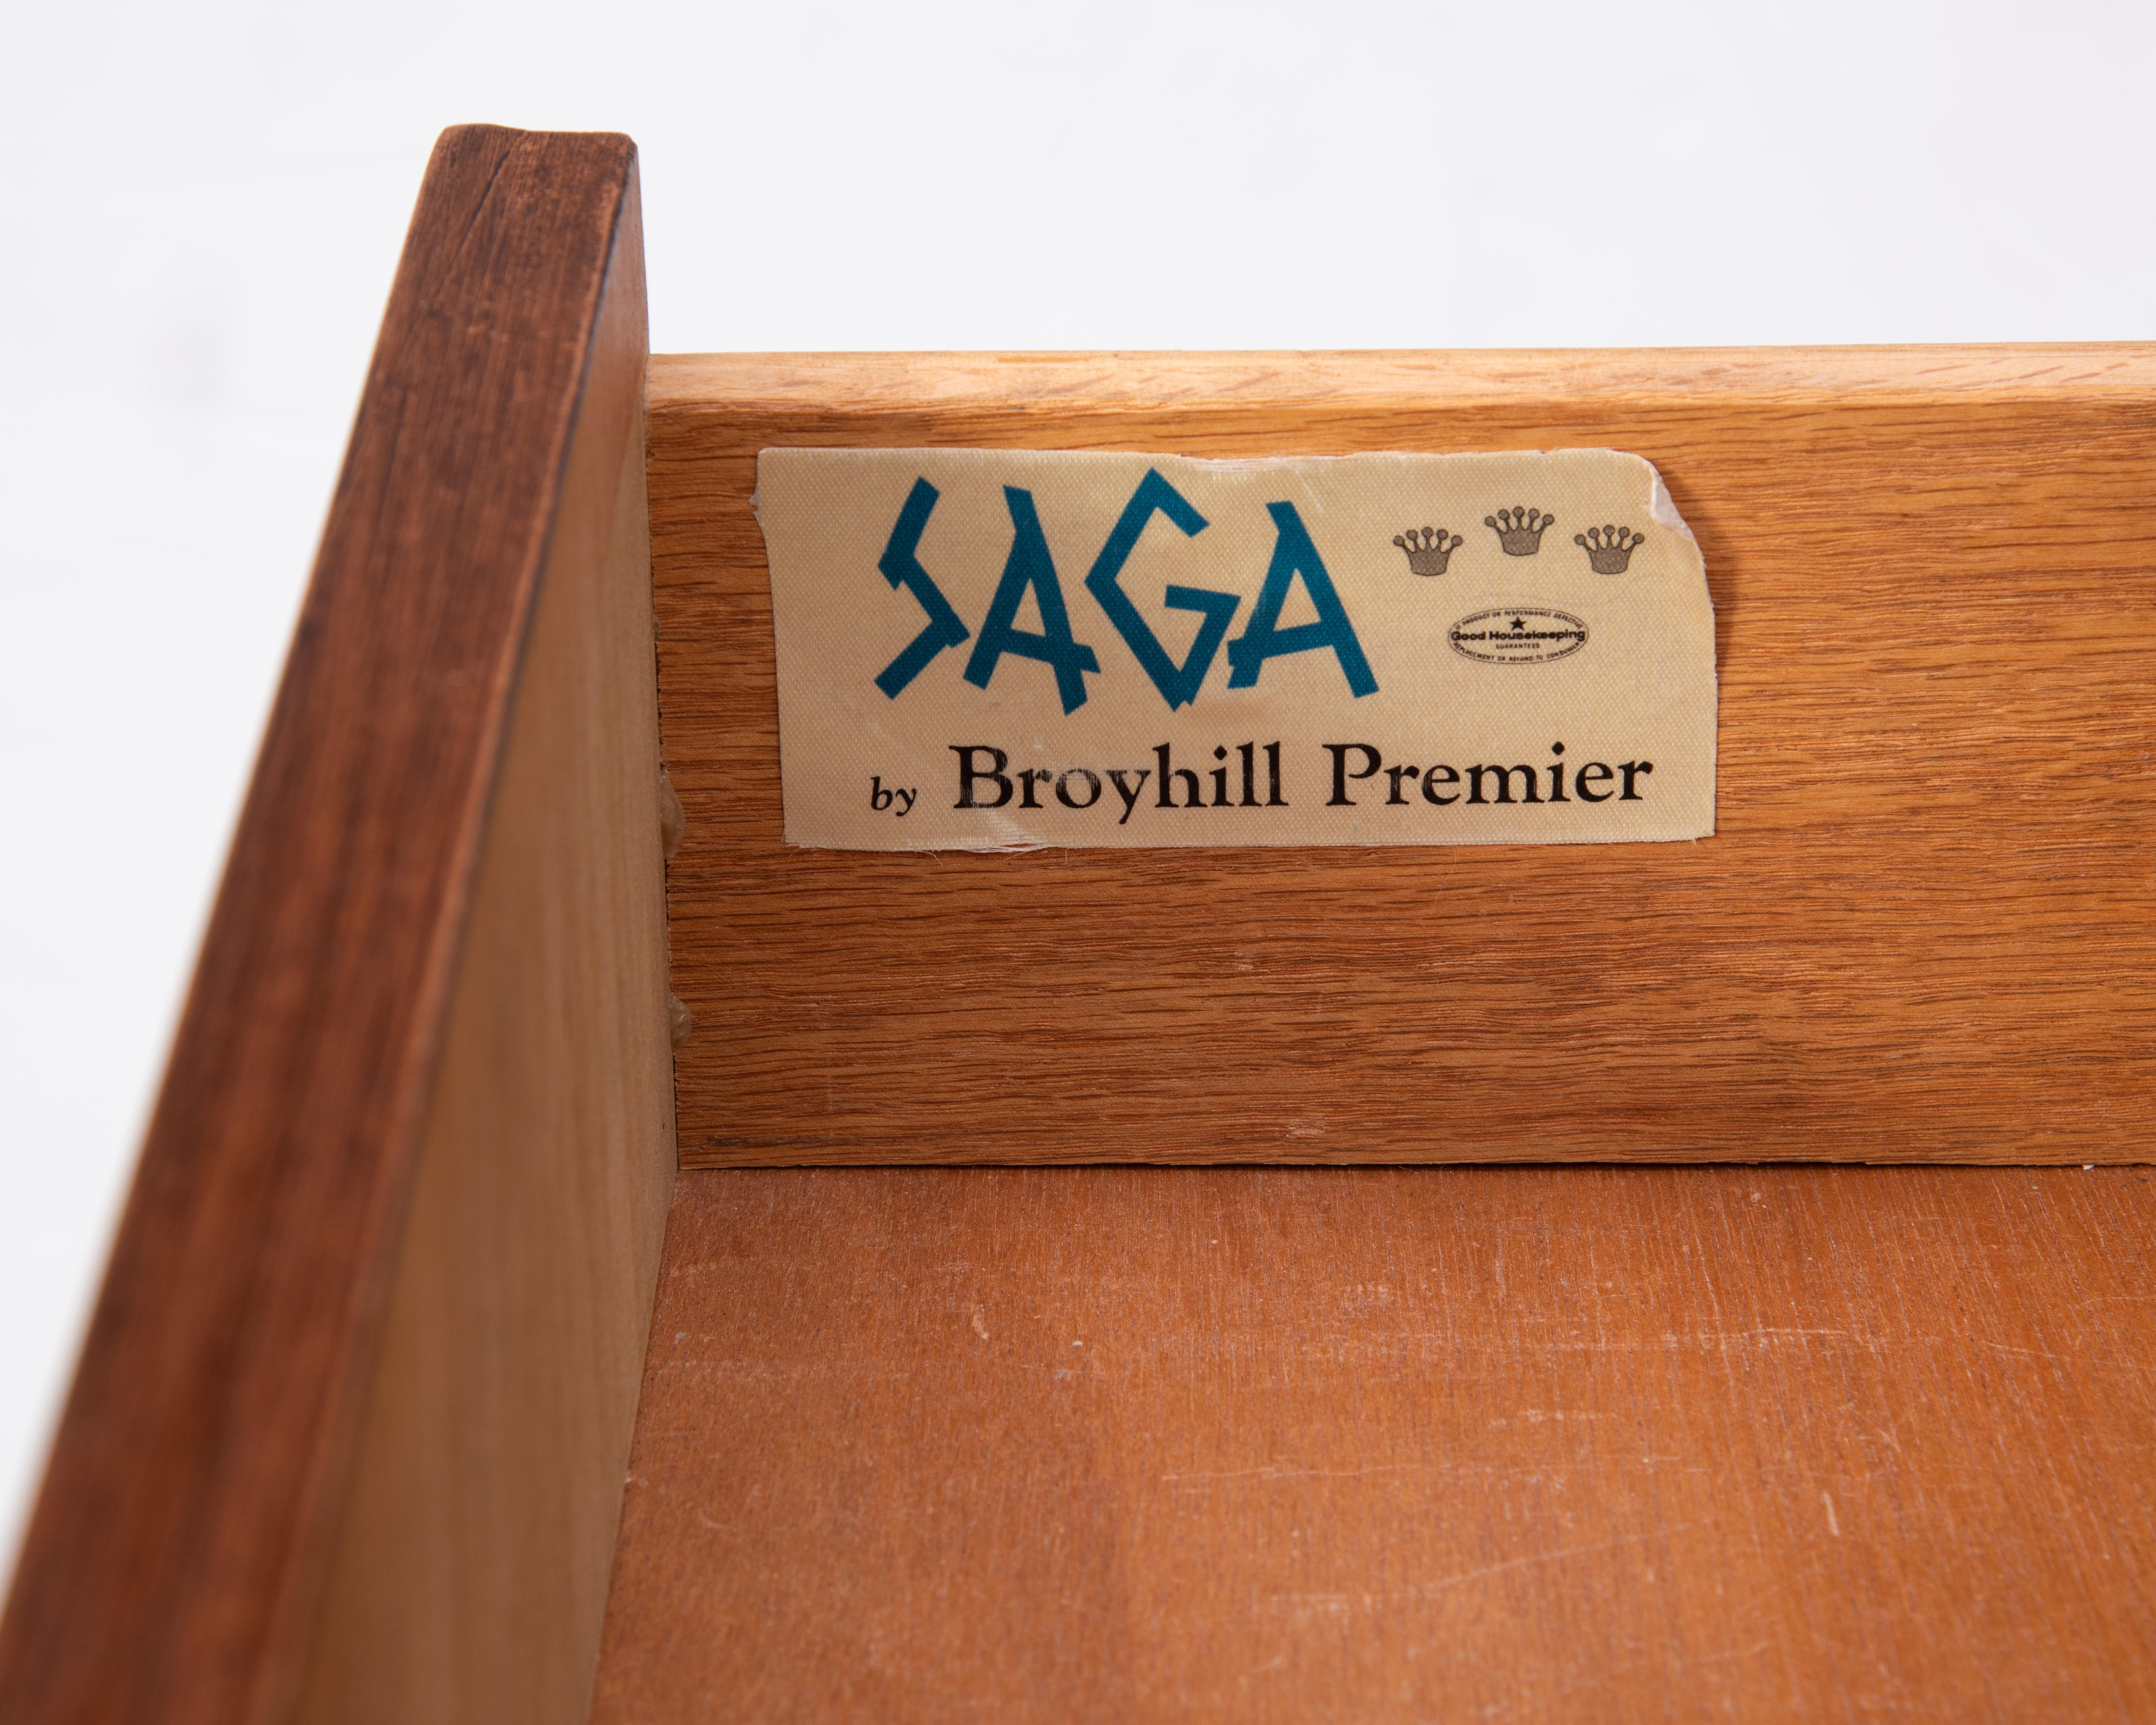 Broyhill Premier Saga Walnut Dresser Starburst Tall Dresser Highboy Mid Century  4